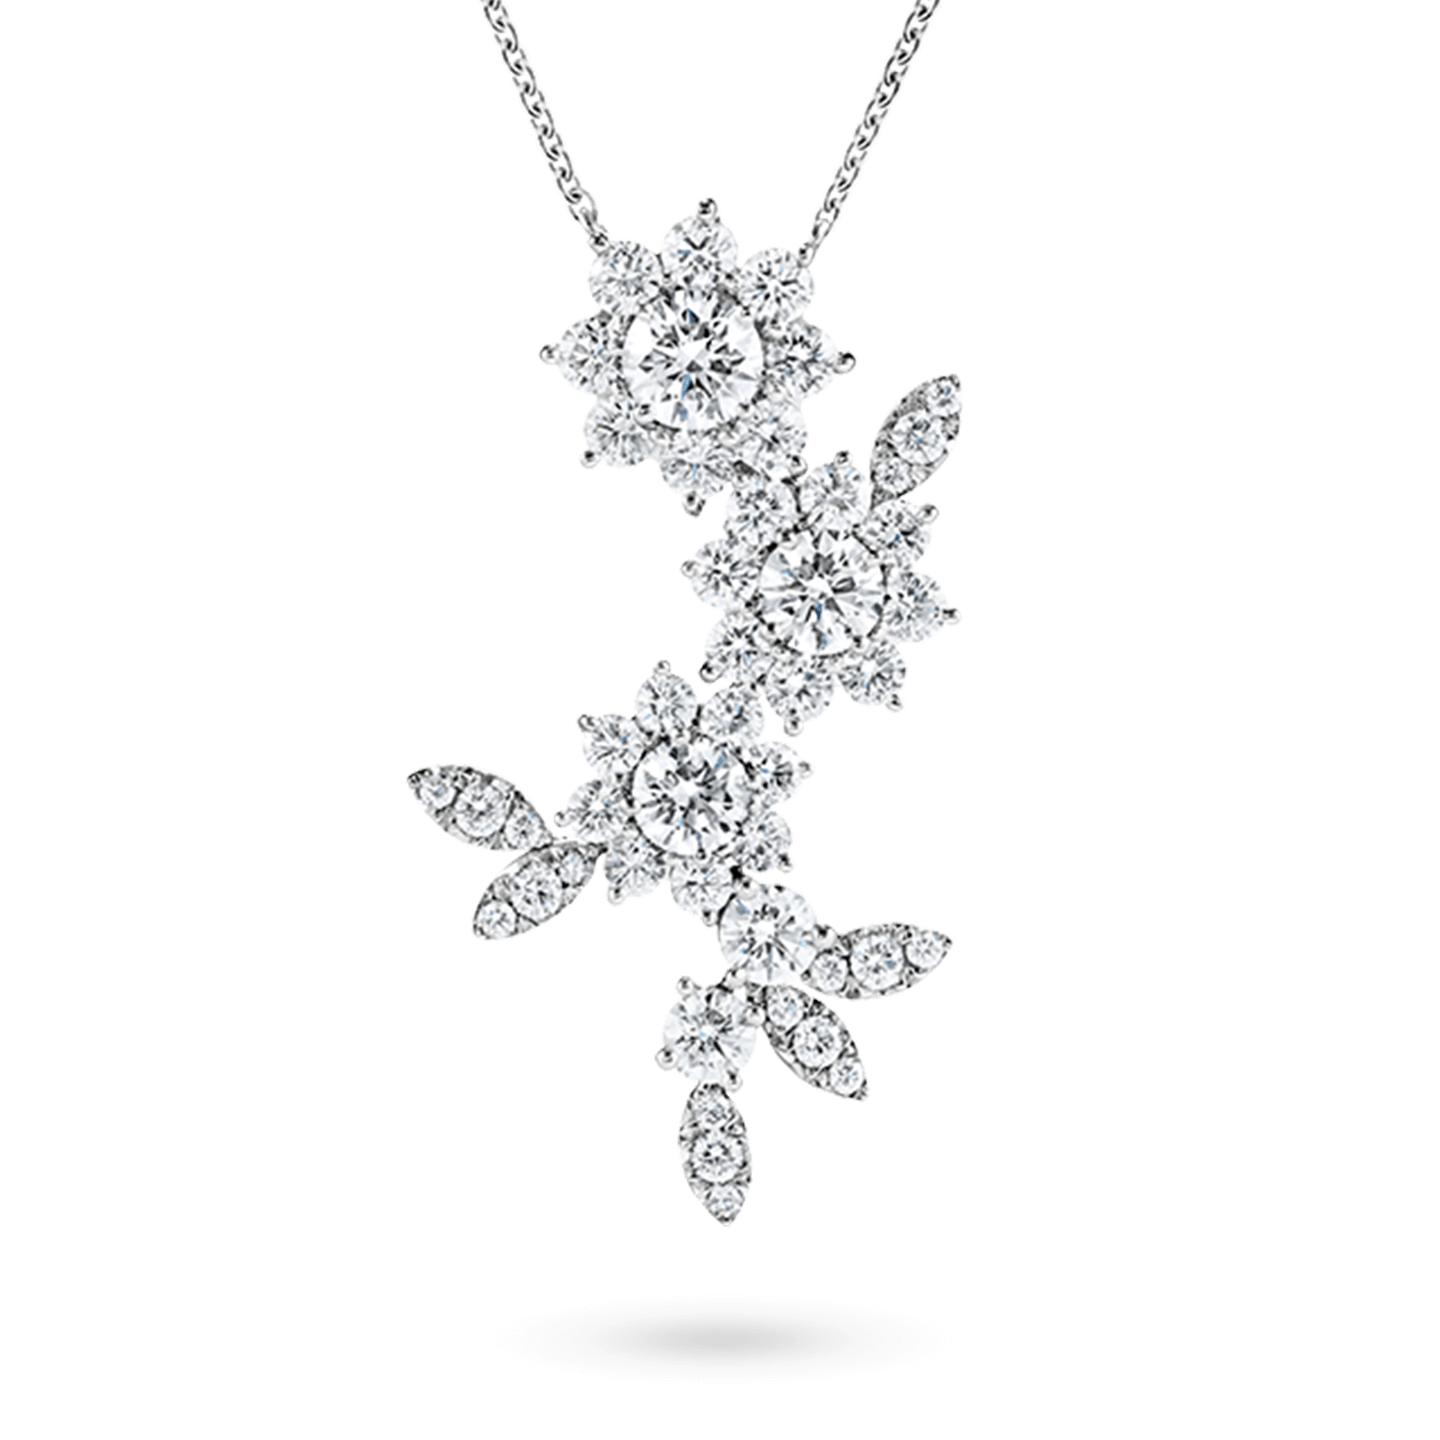 This Harry Winston Necklace With Rare 38 Carat Diamond Has a Price Tag of  $7.5M - JCK